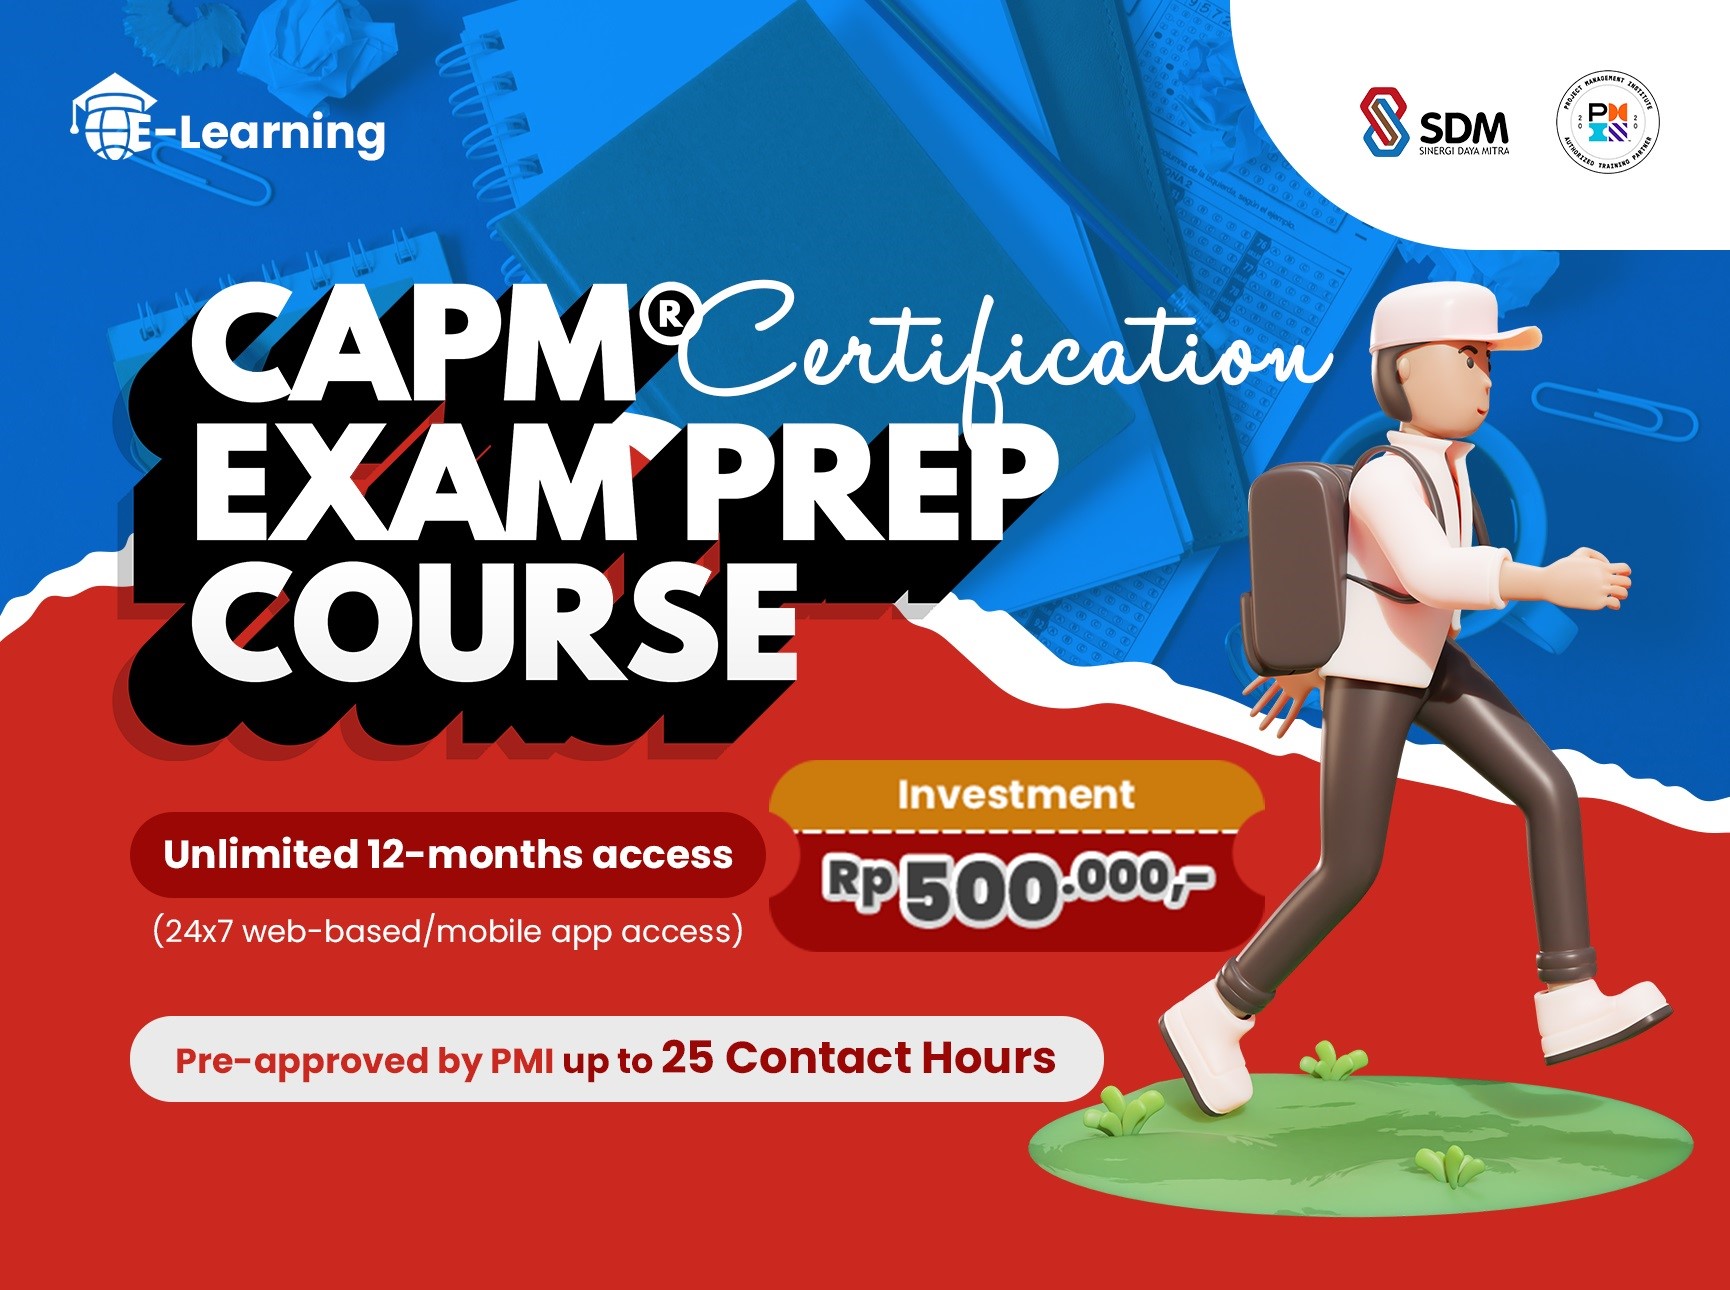 CAPM Certification Exam Prep